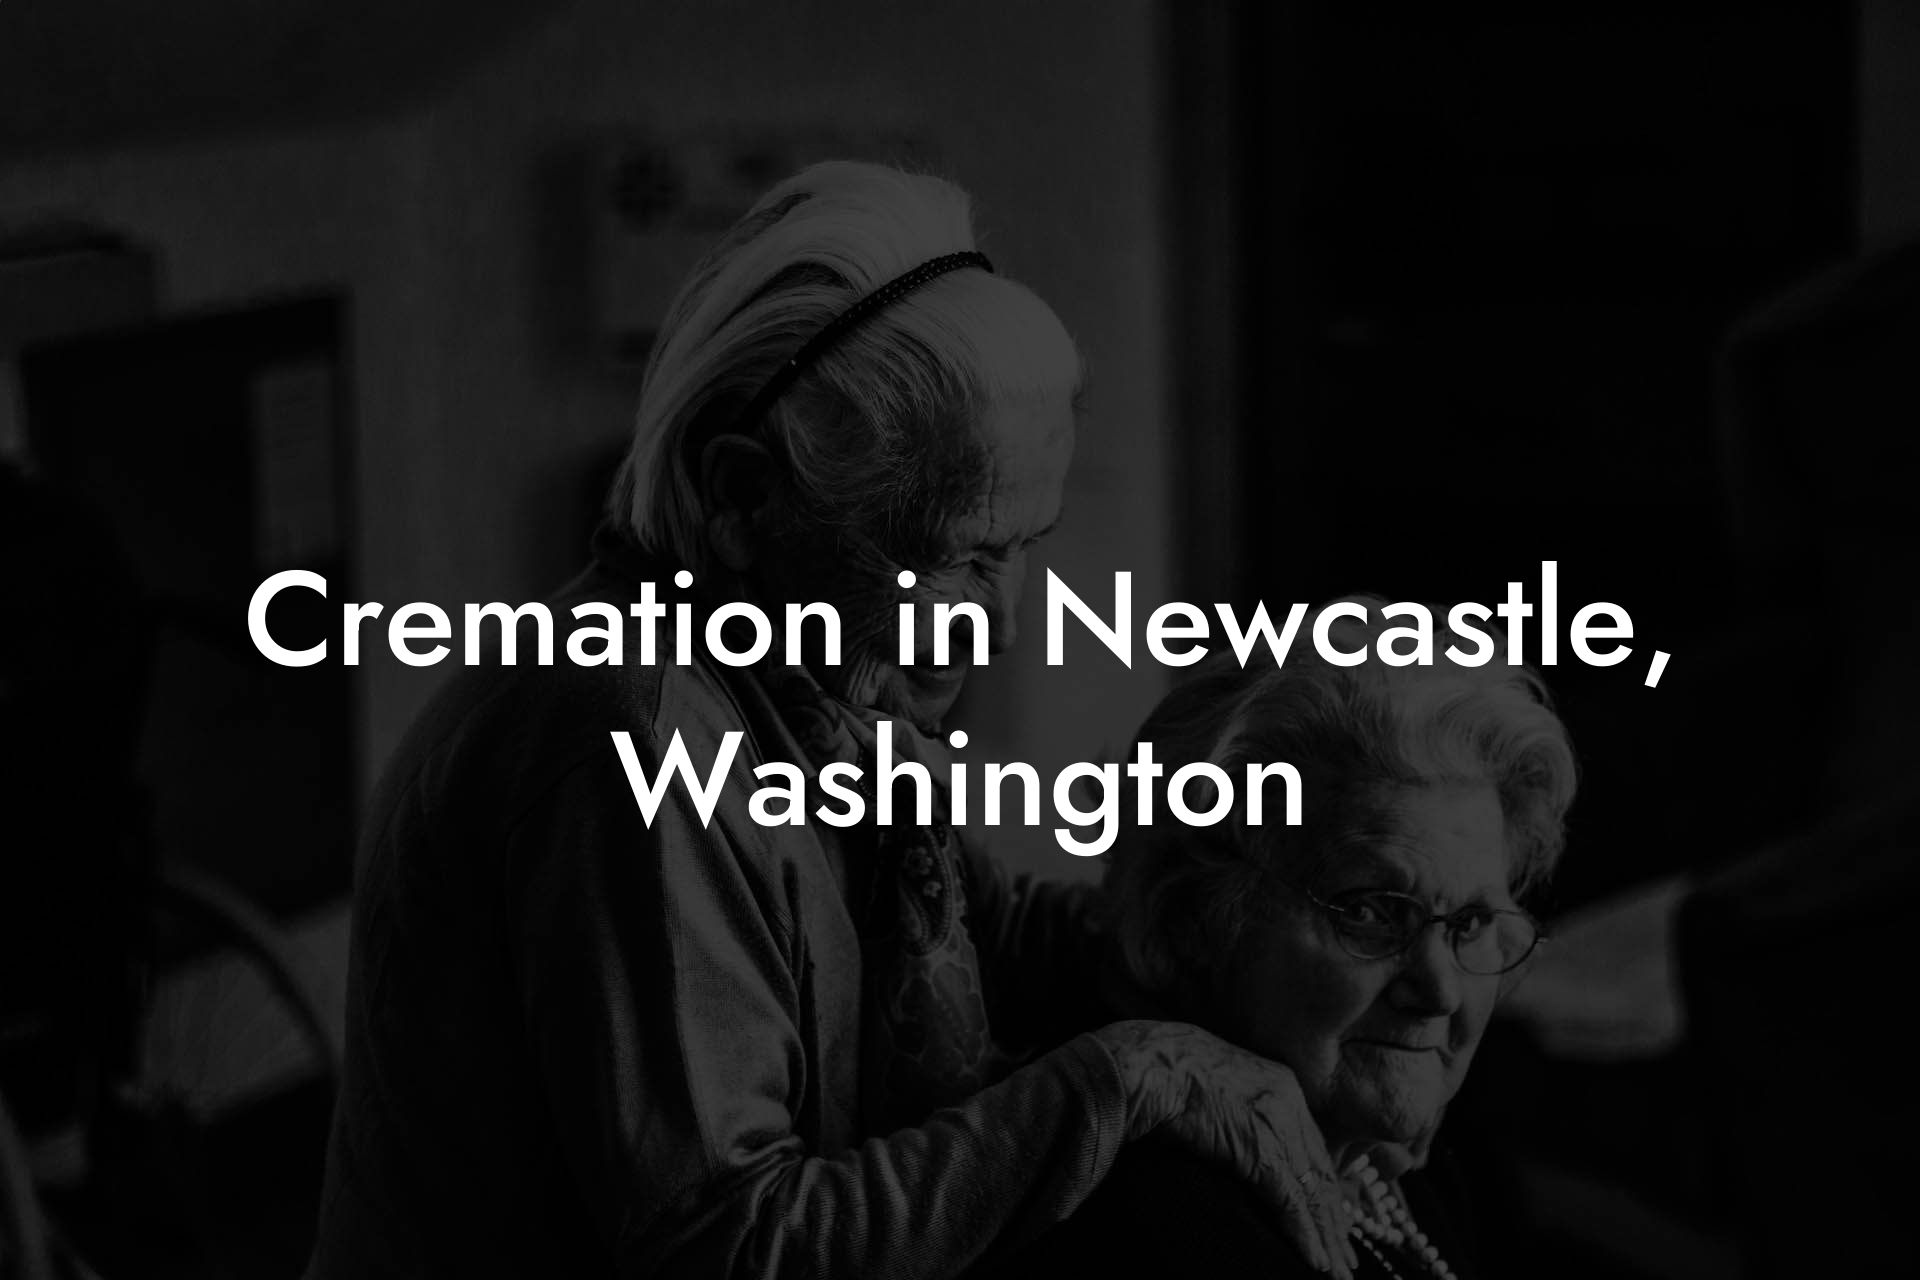 Cremation in Newcastle, Washington